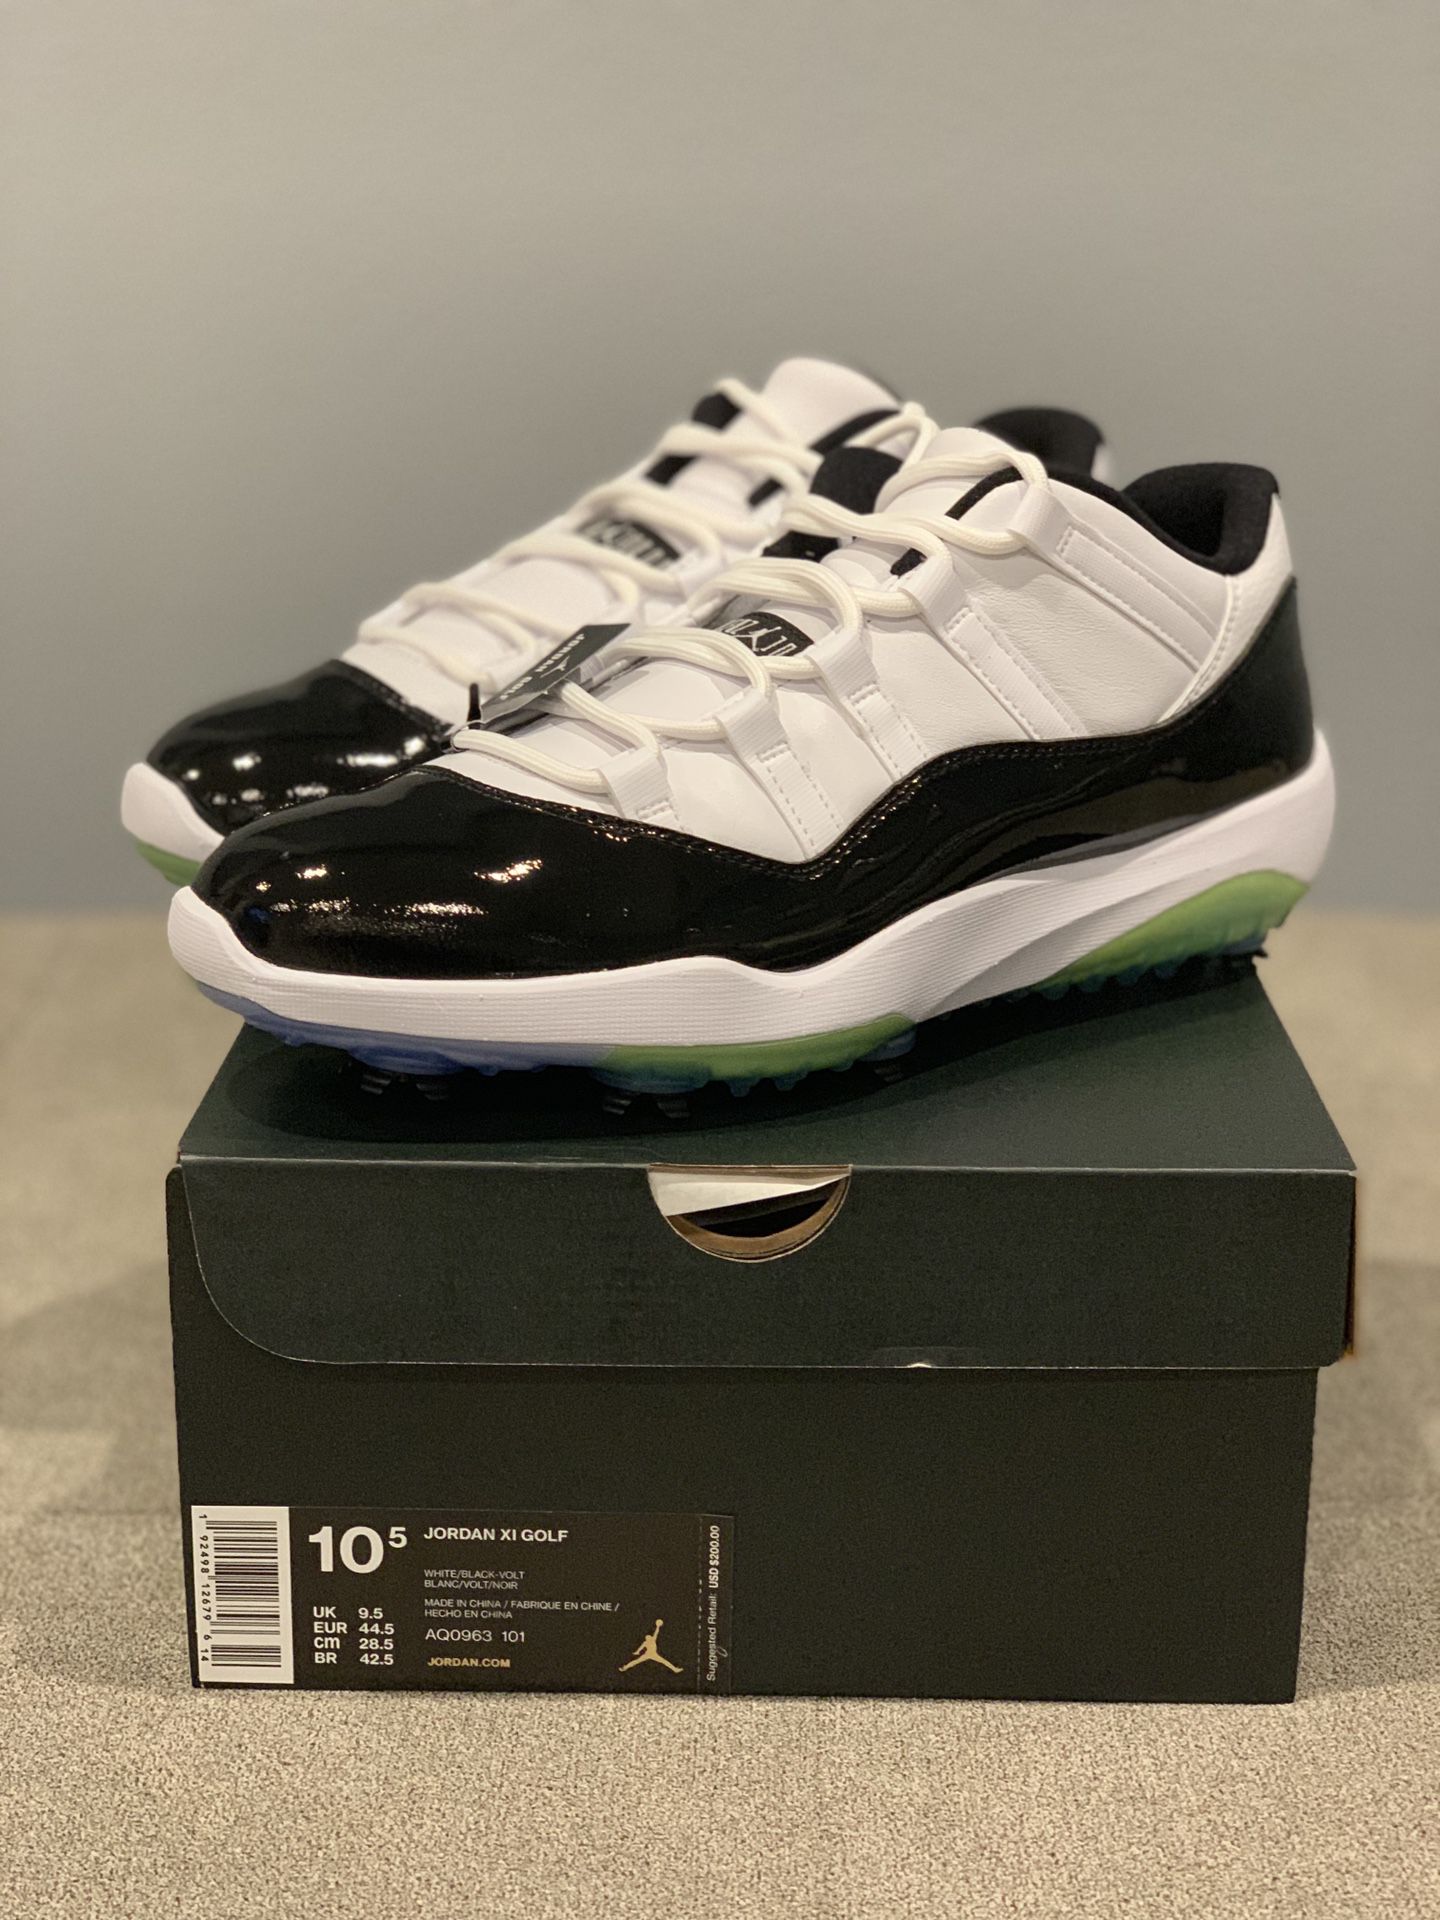 Air Jordan 11 Golf Shoes men’s size 10.5 brand new in box